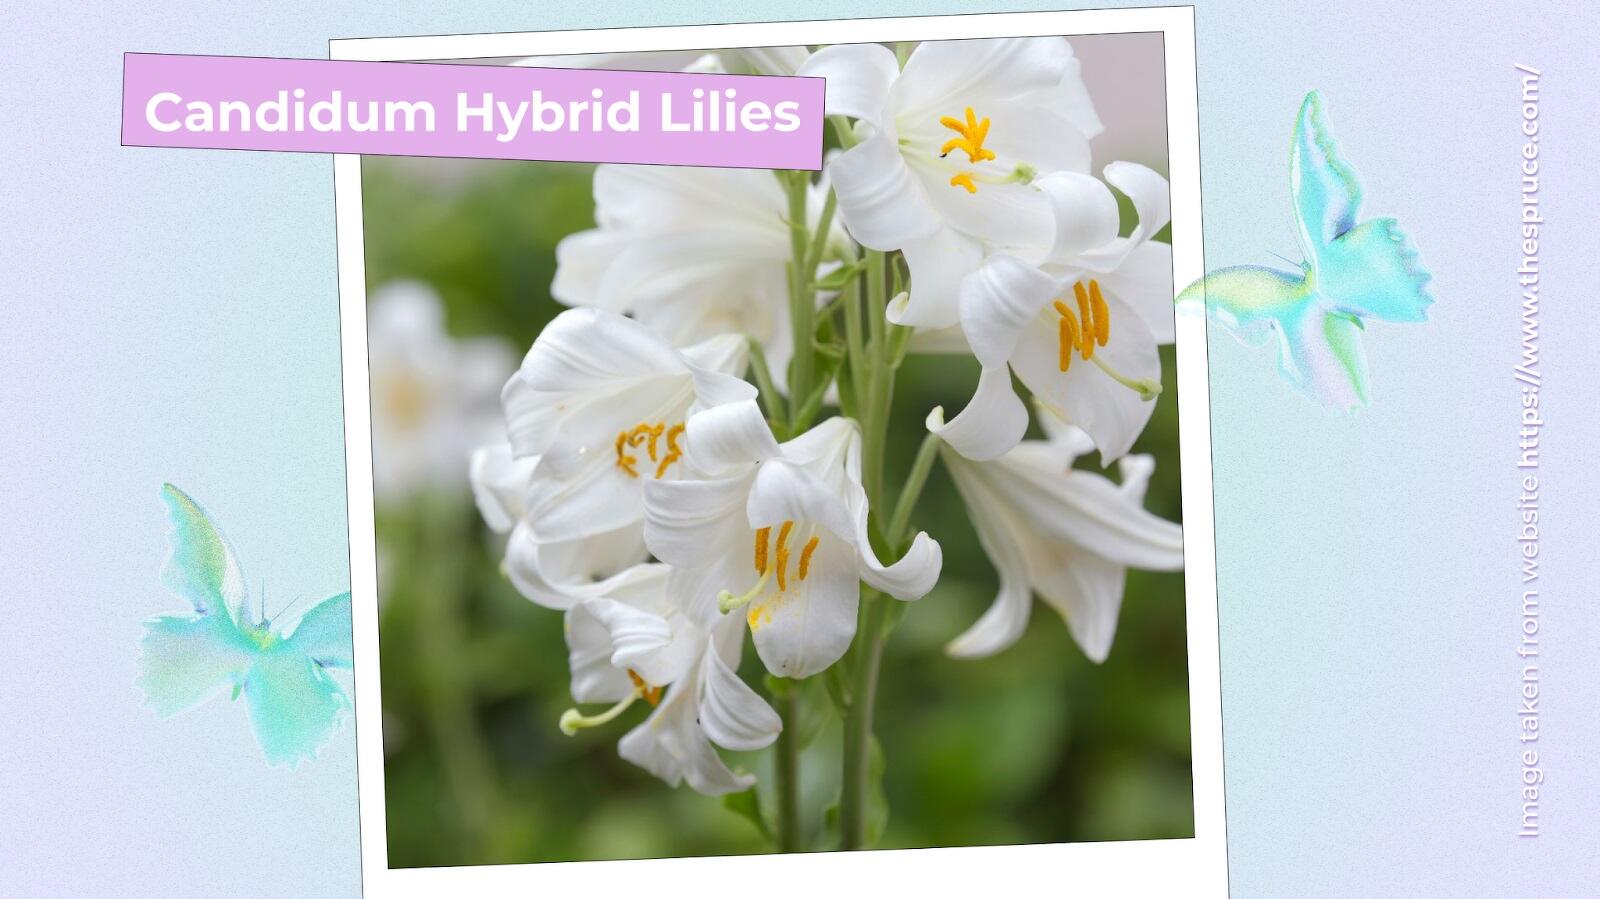 Candidum Hybrid Lilies